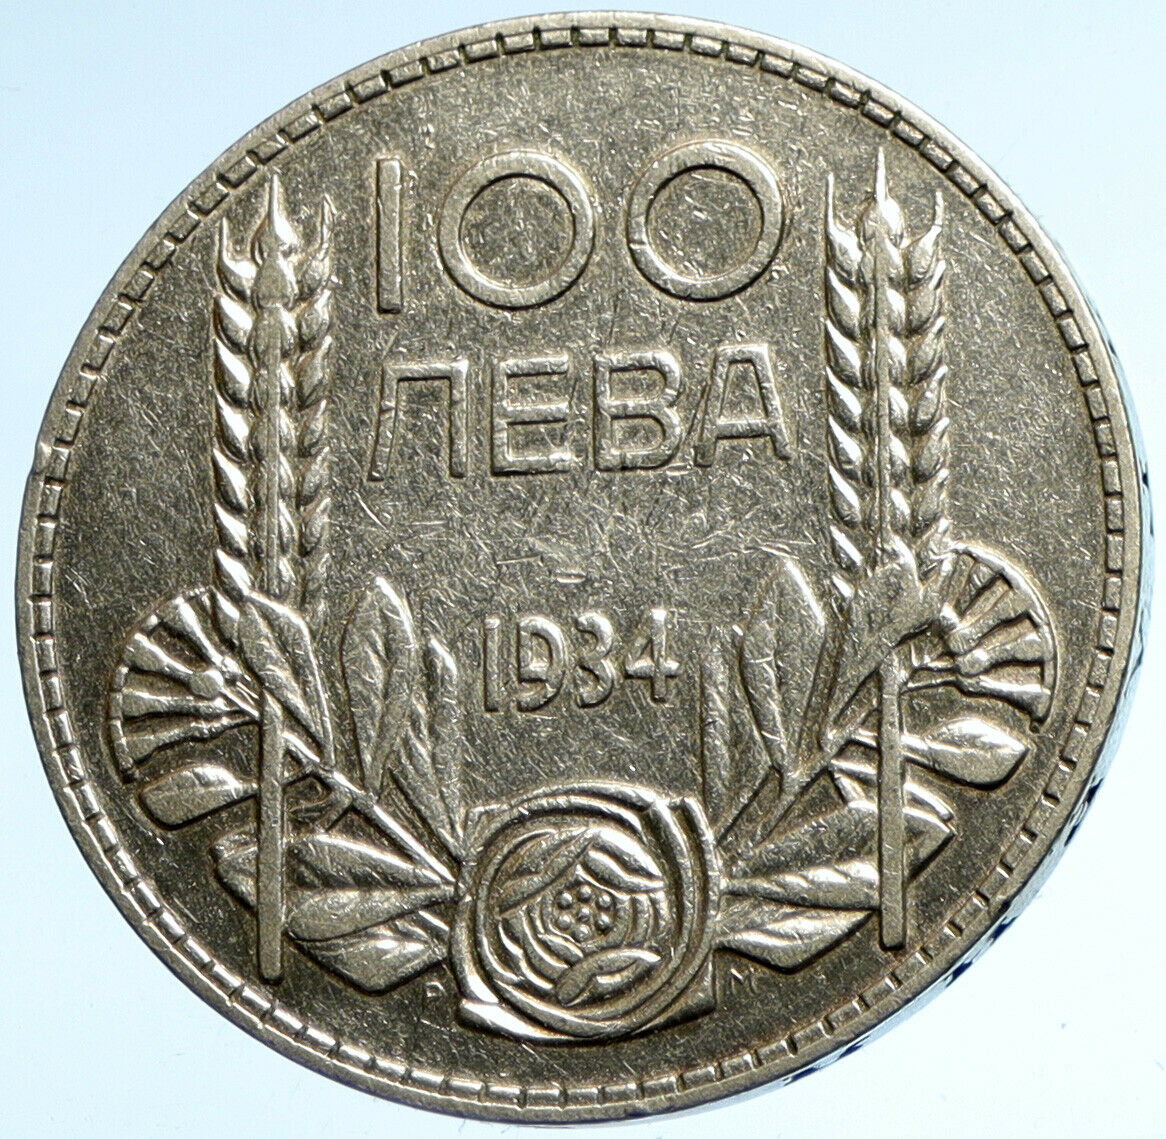 1934 Boris III Tsar of Bulgaria 100 Leva Large Old European Silver Coin i102937